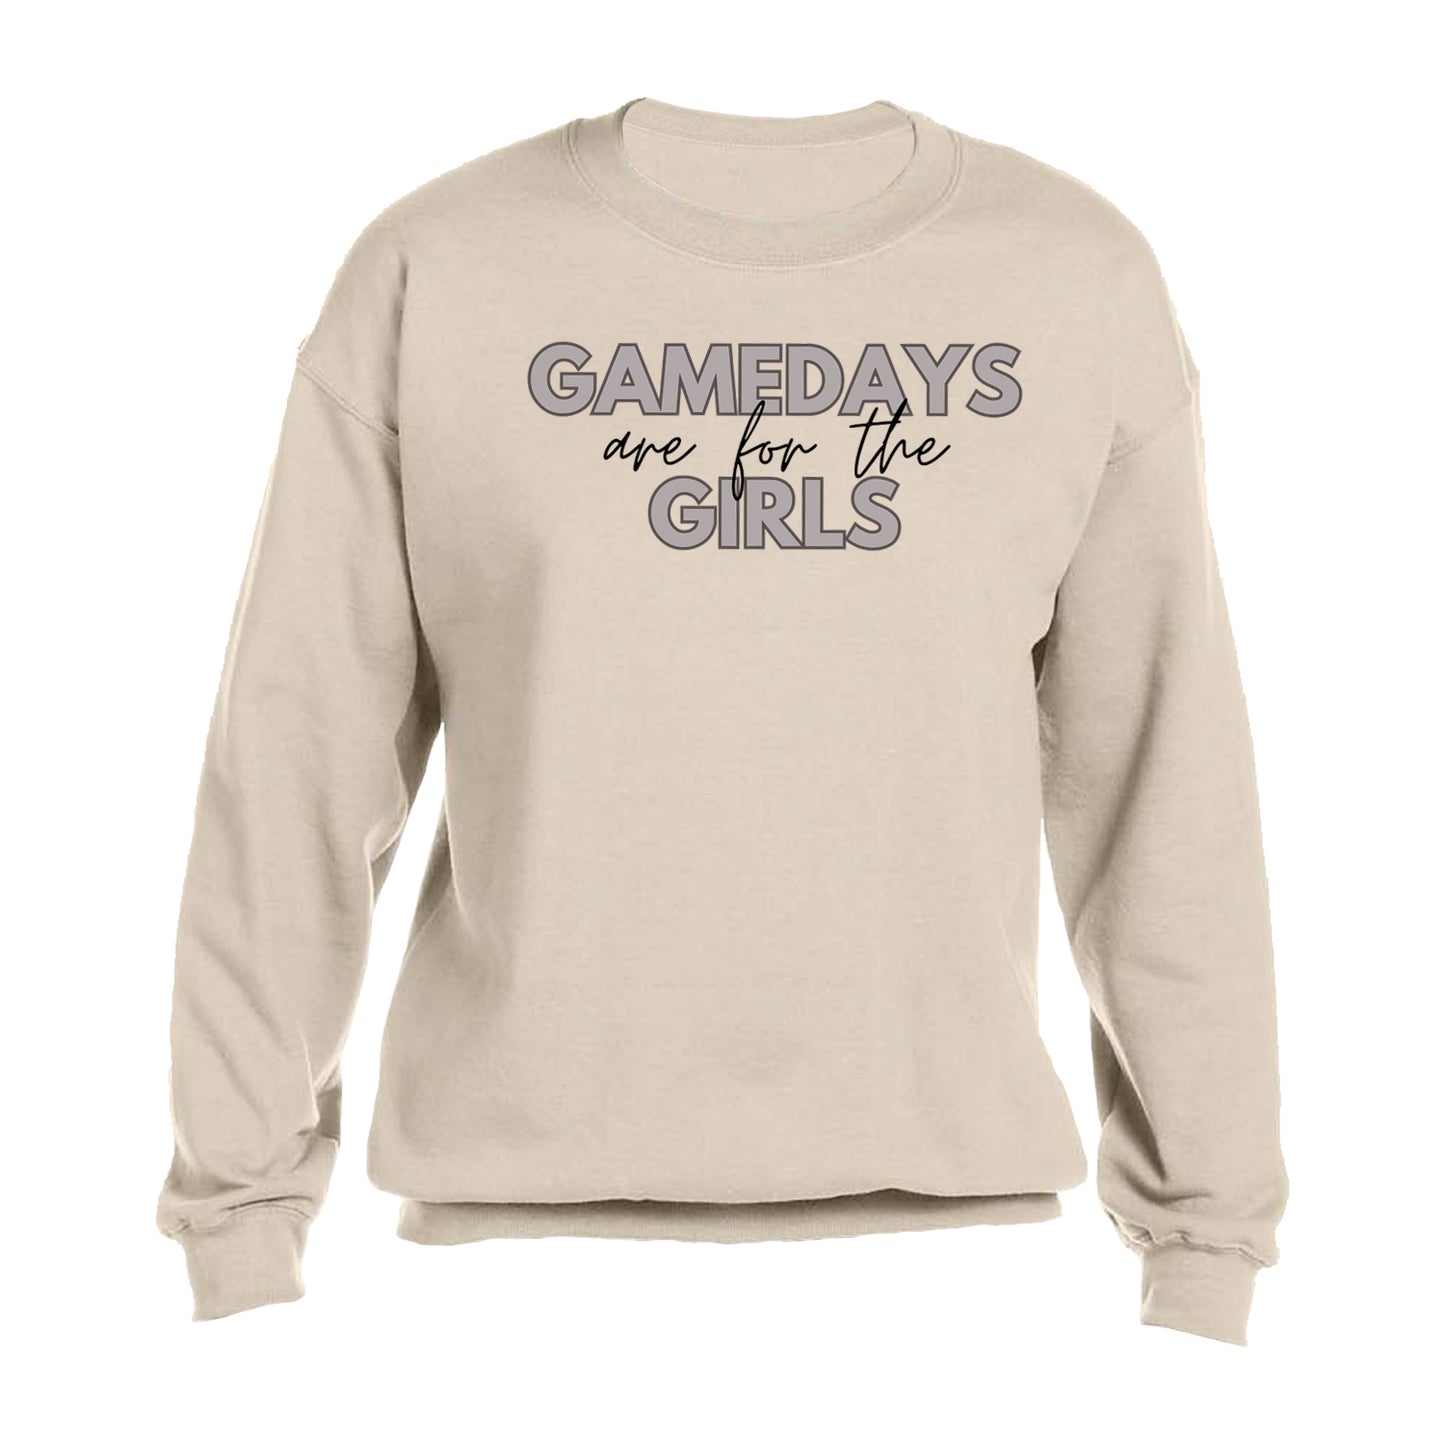 "GAMEDAYS are for the GIRLS" - Sweatshirt